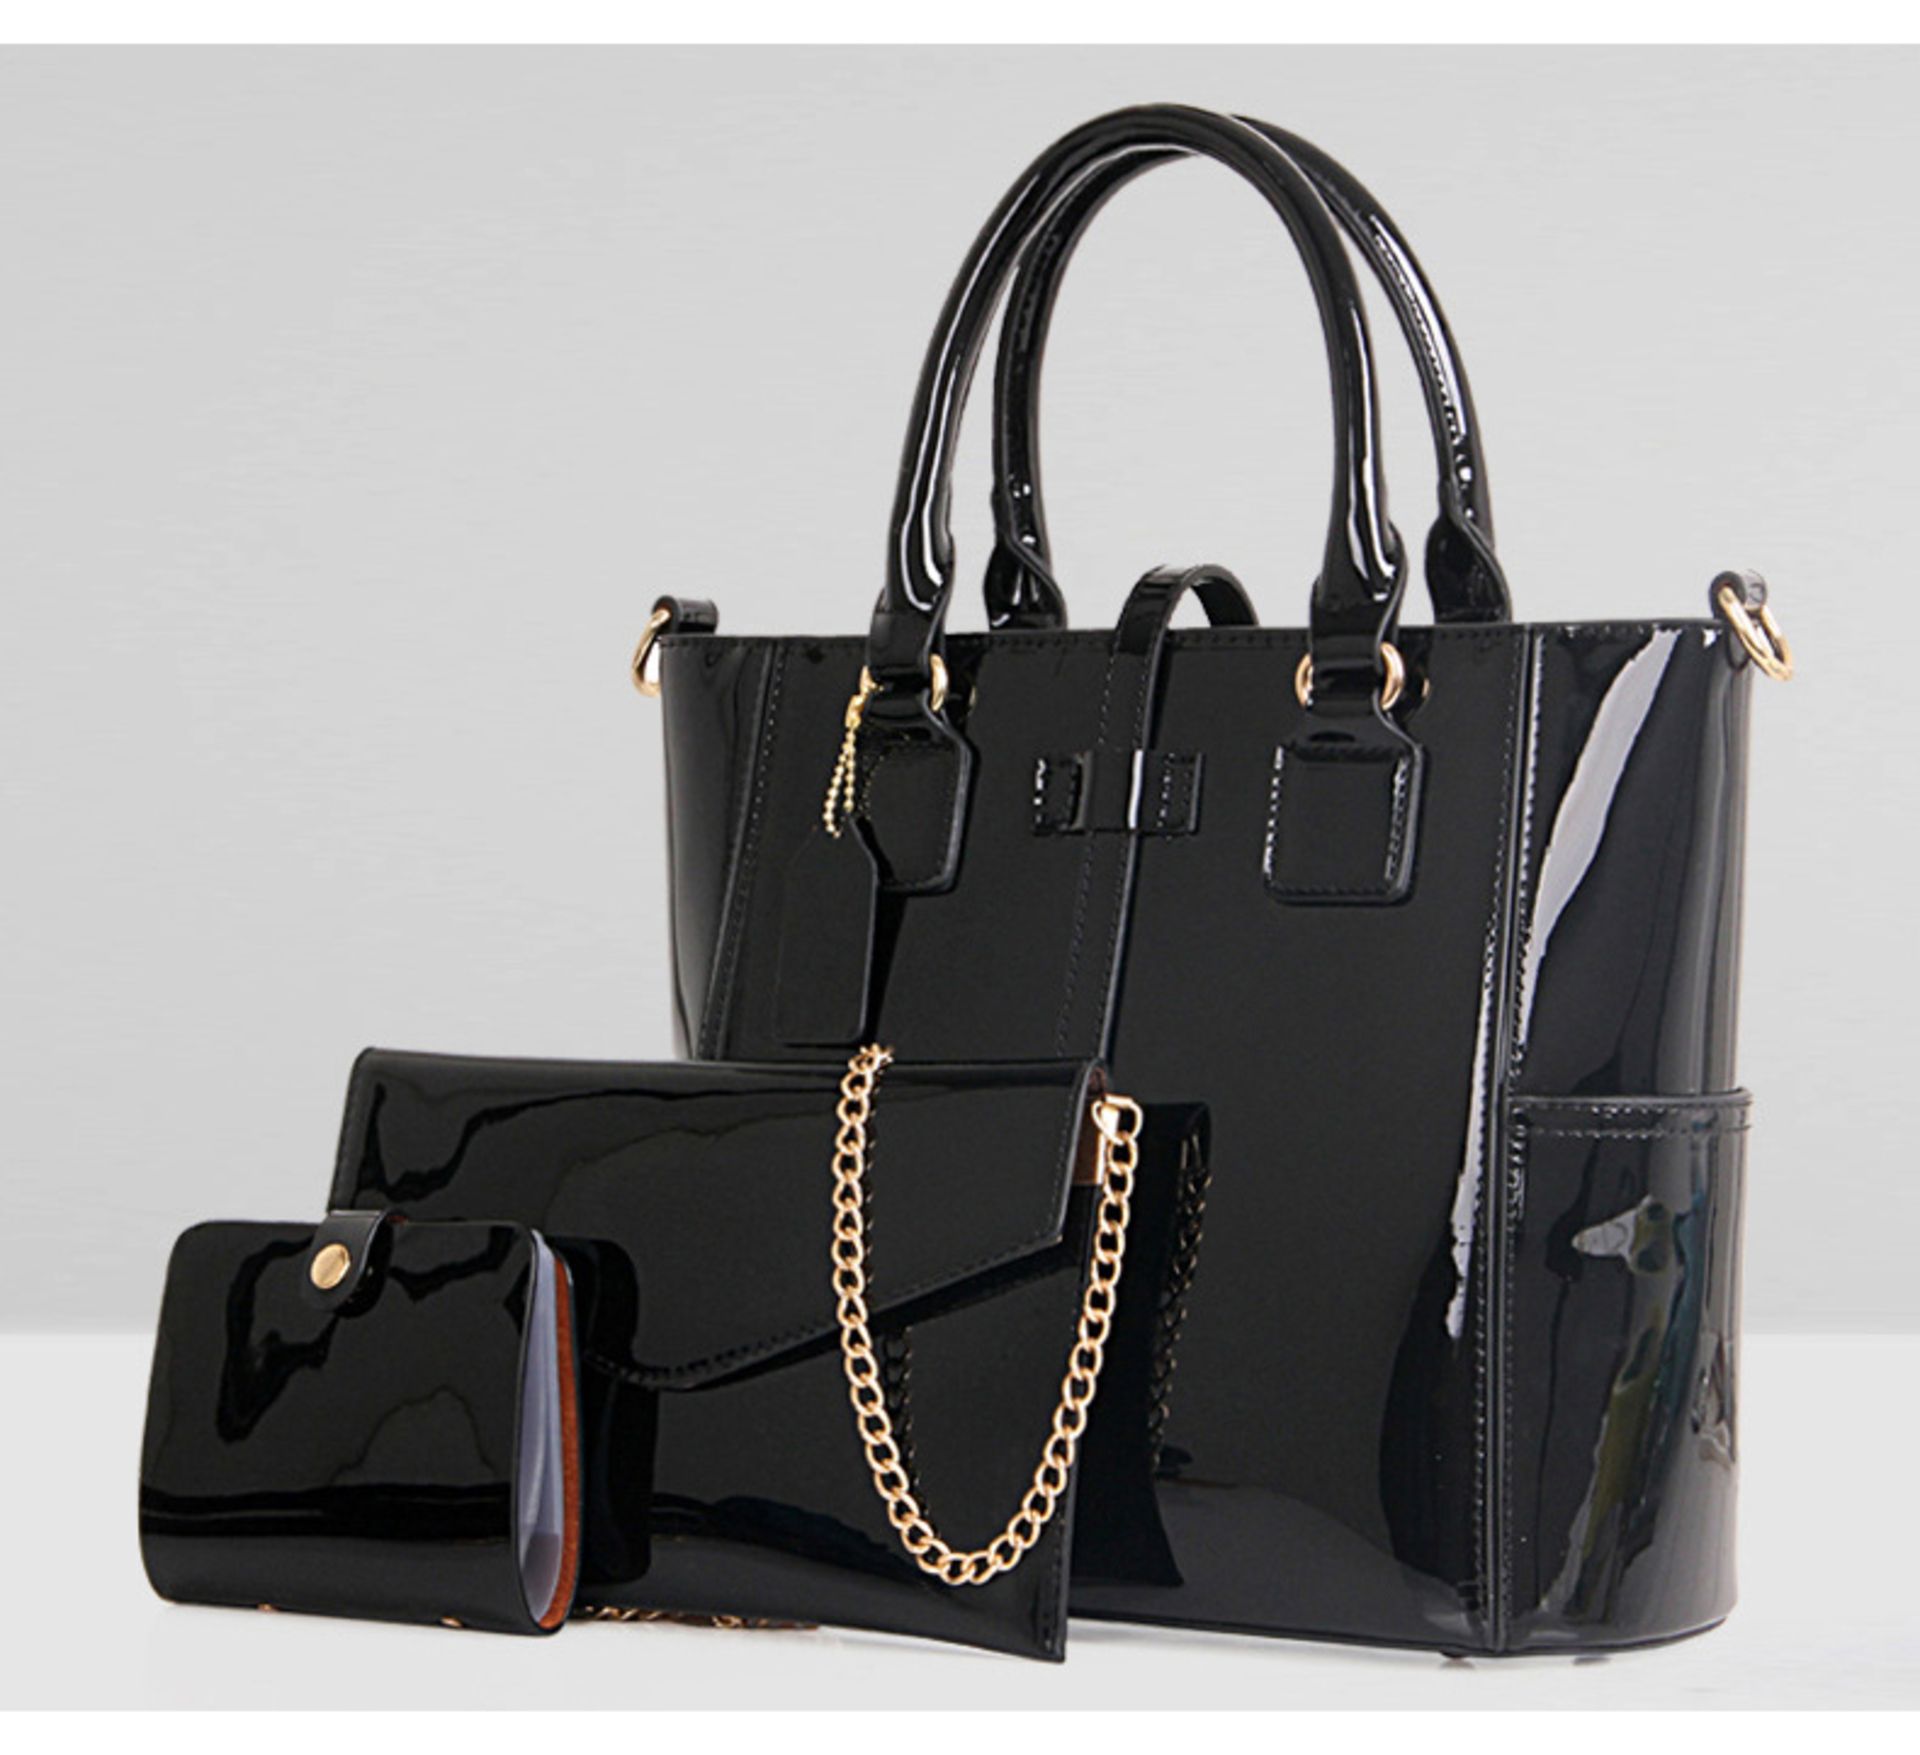 Brand New Black Three Piece Fashion Bag Set Inc Large Handbag / Clutch Evening Bag And Small Card